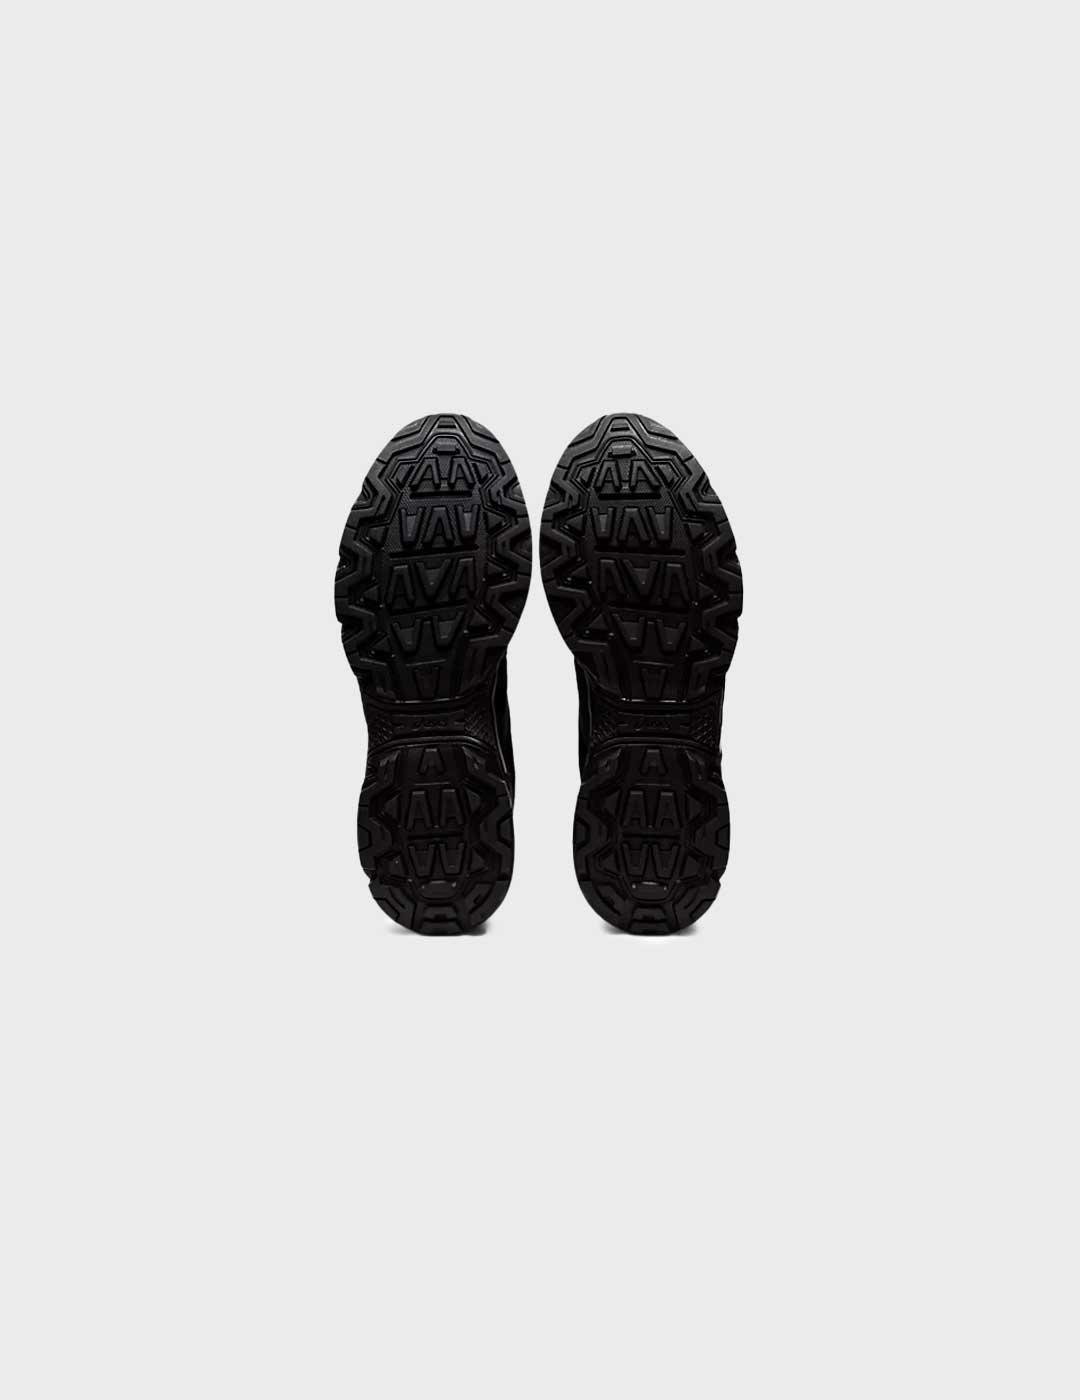 Asics Gel-Venture 6 zapatillas negras para hombre